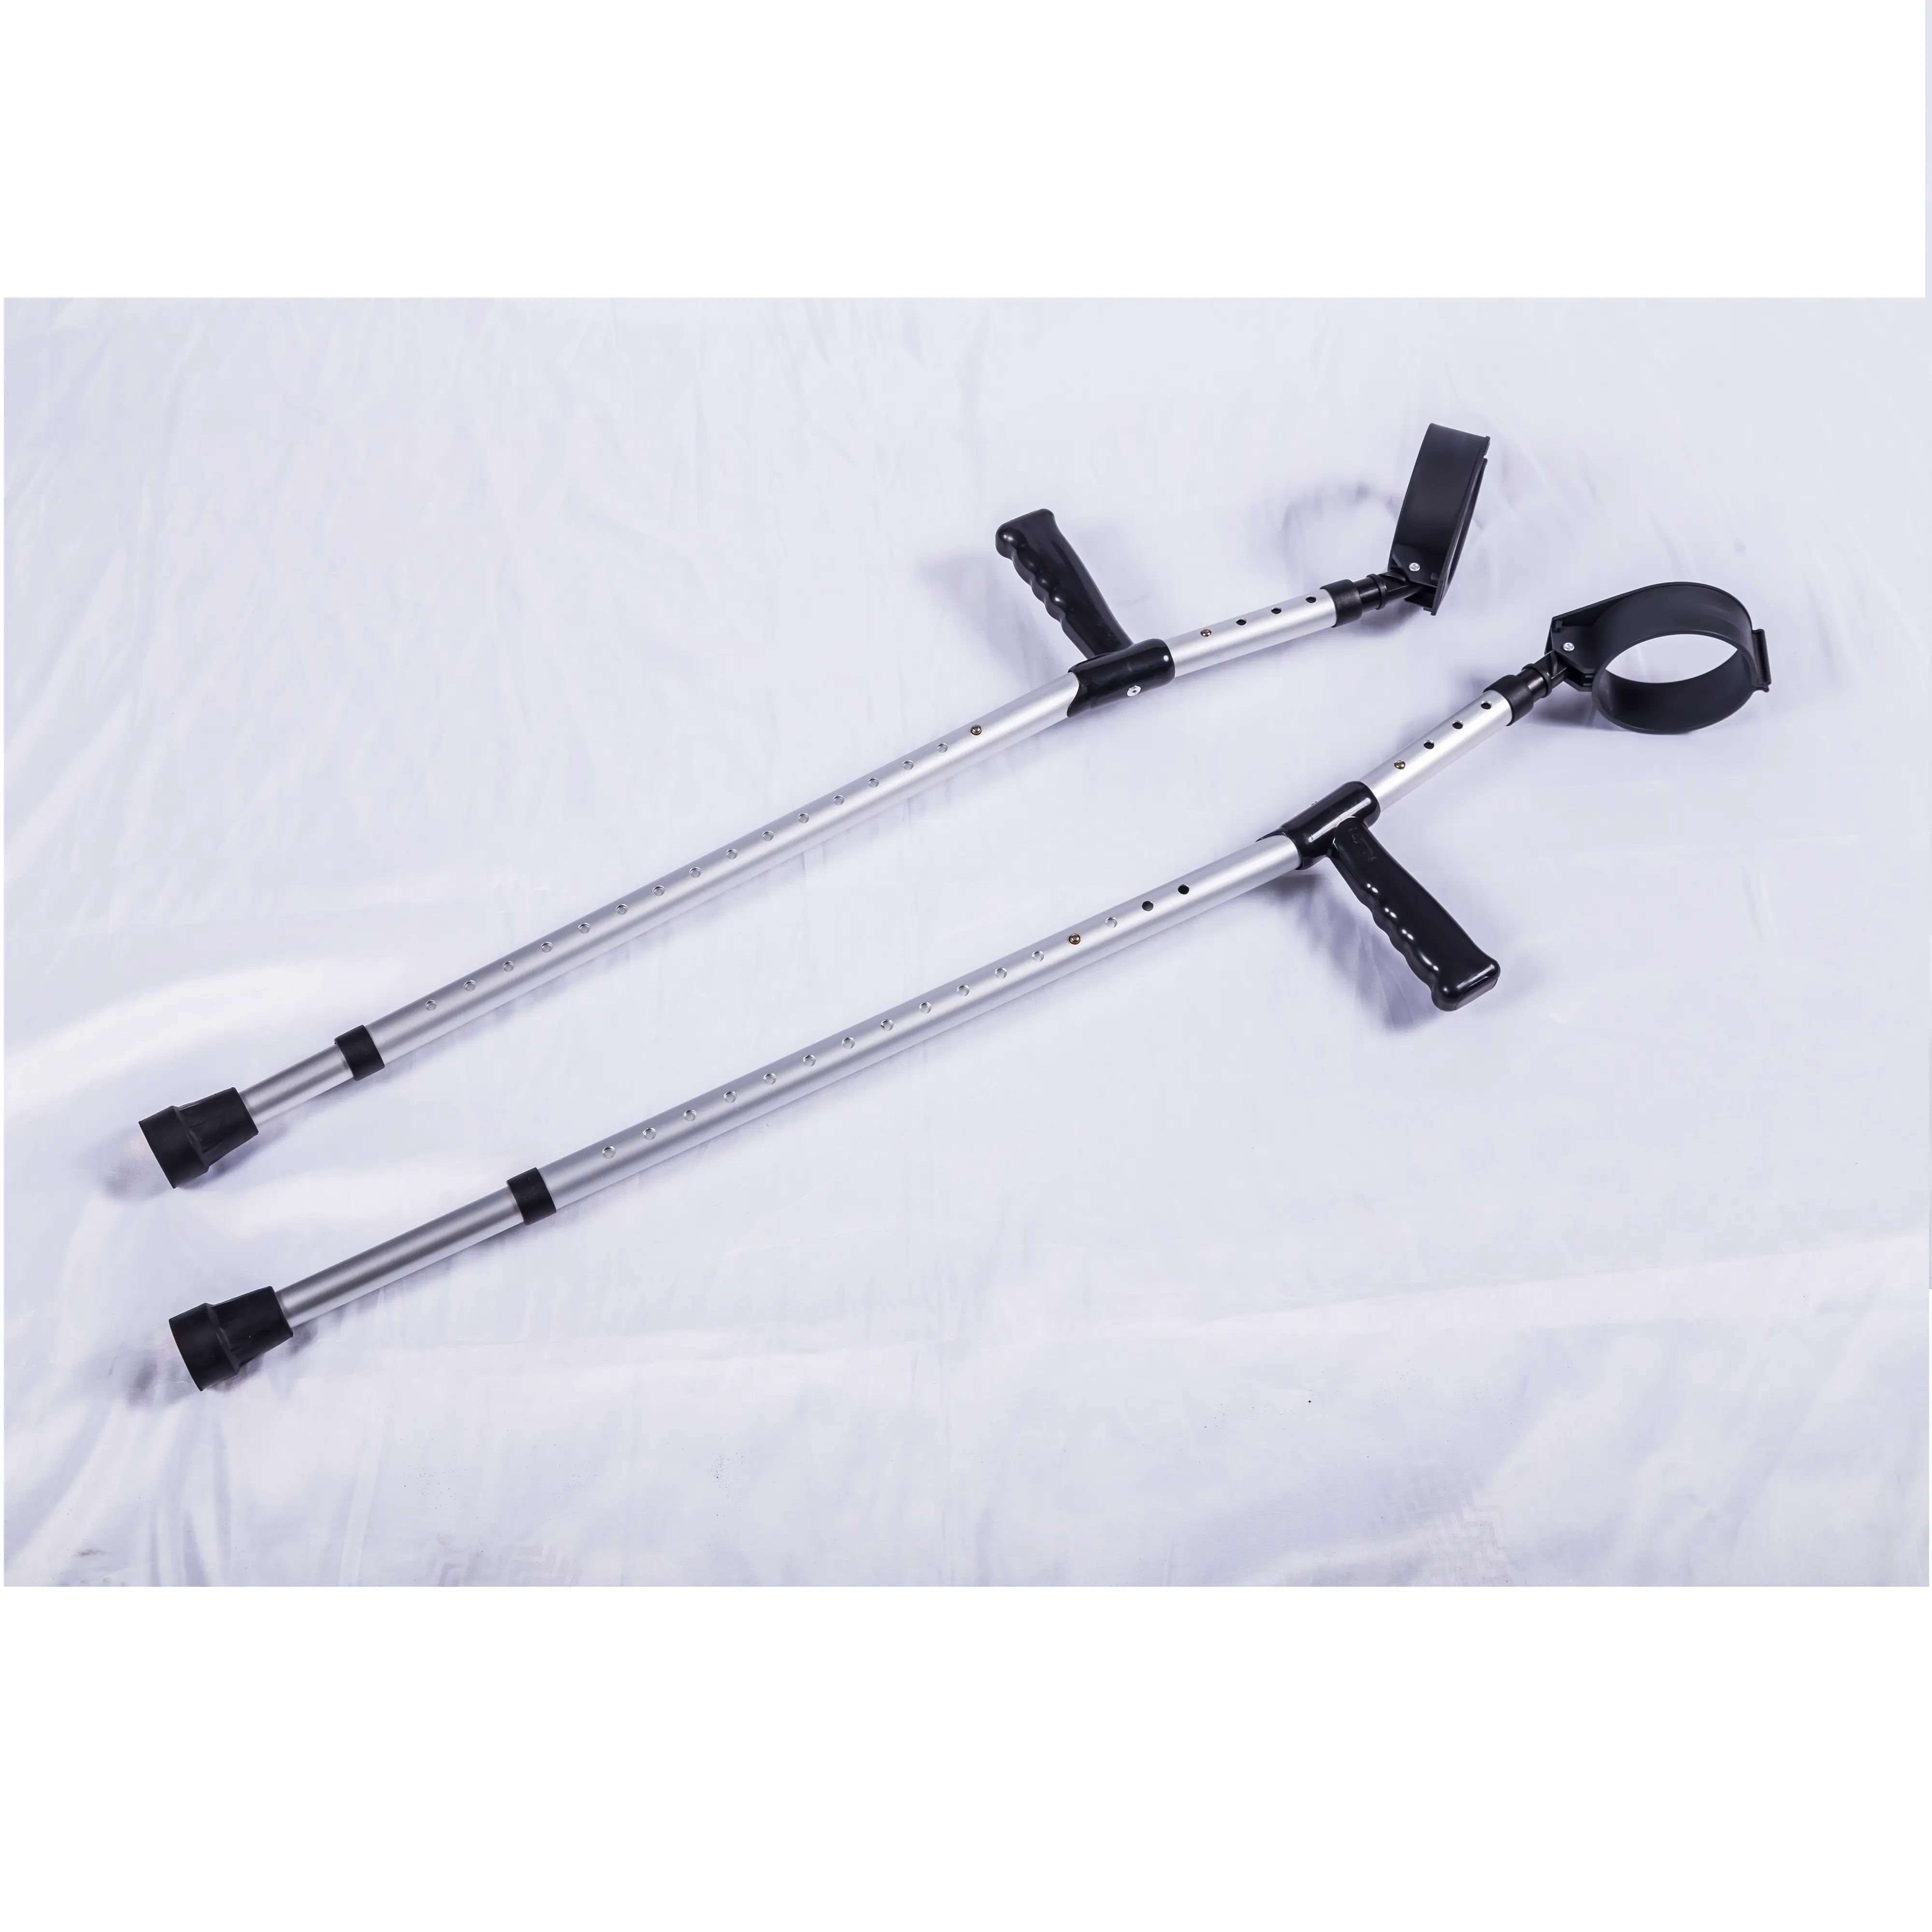 Medically adjustable aluminum forearm walking elbow crutches